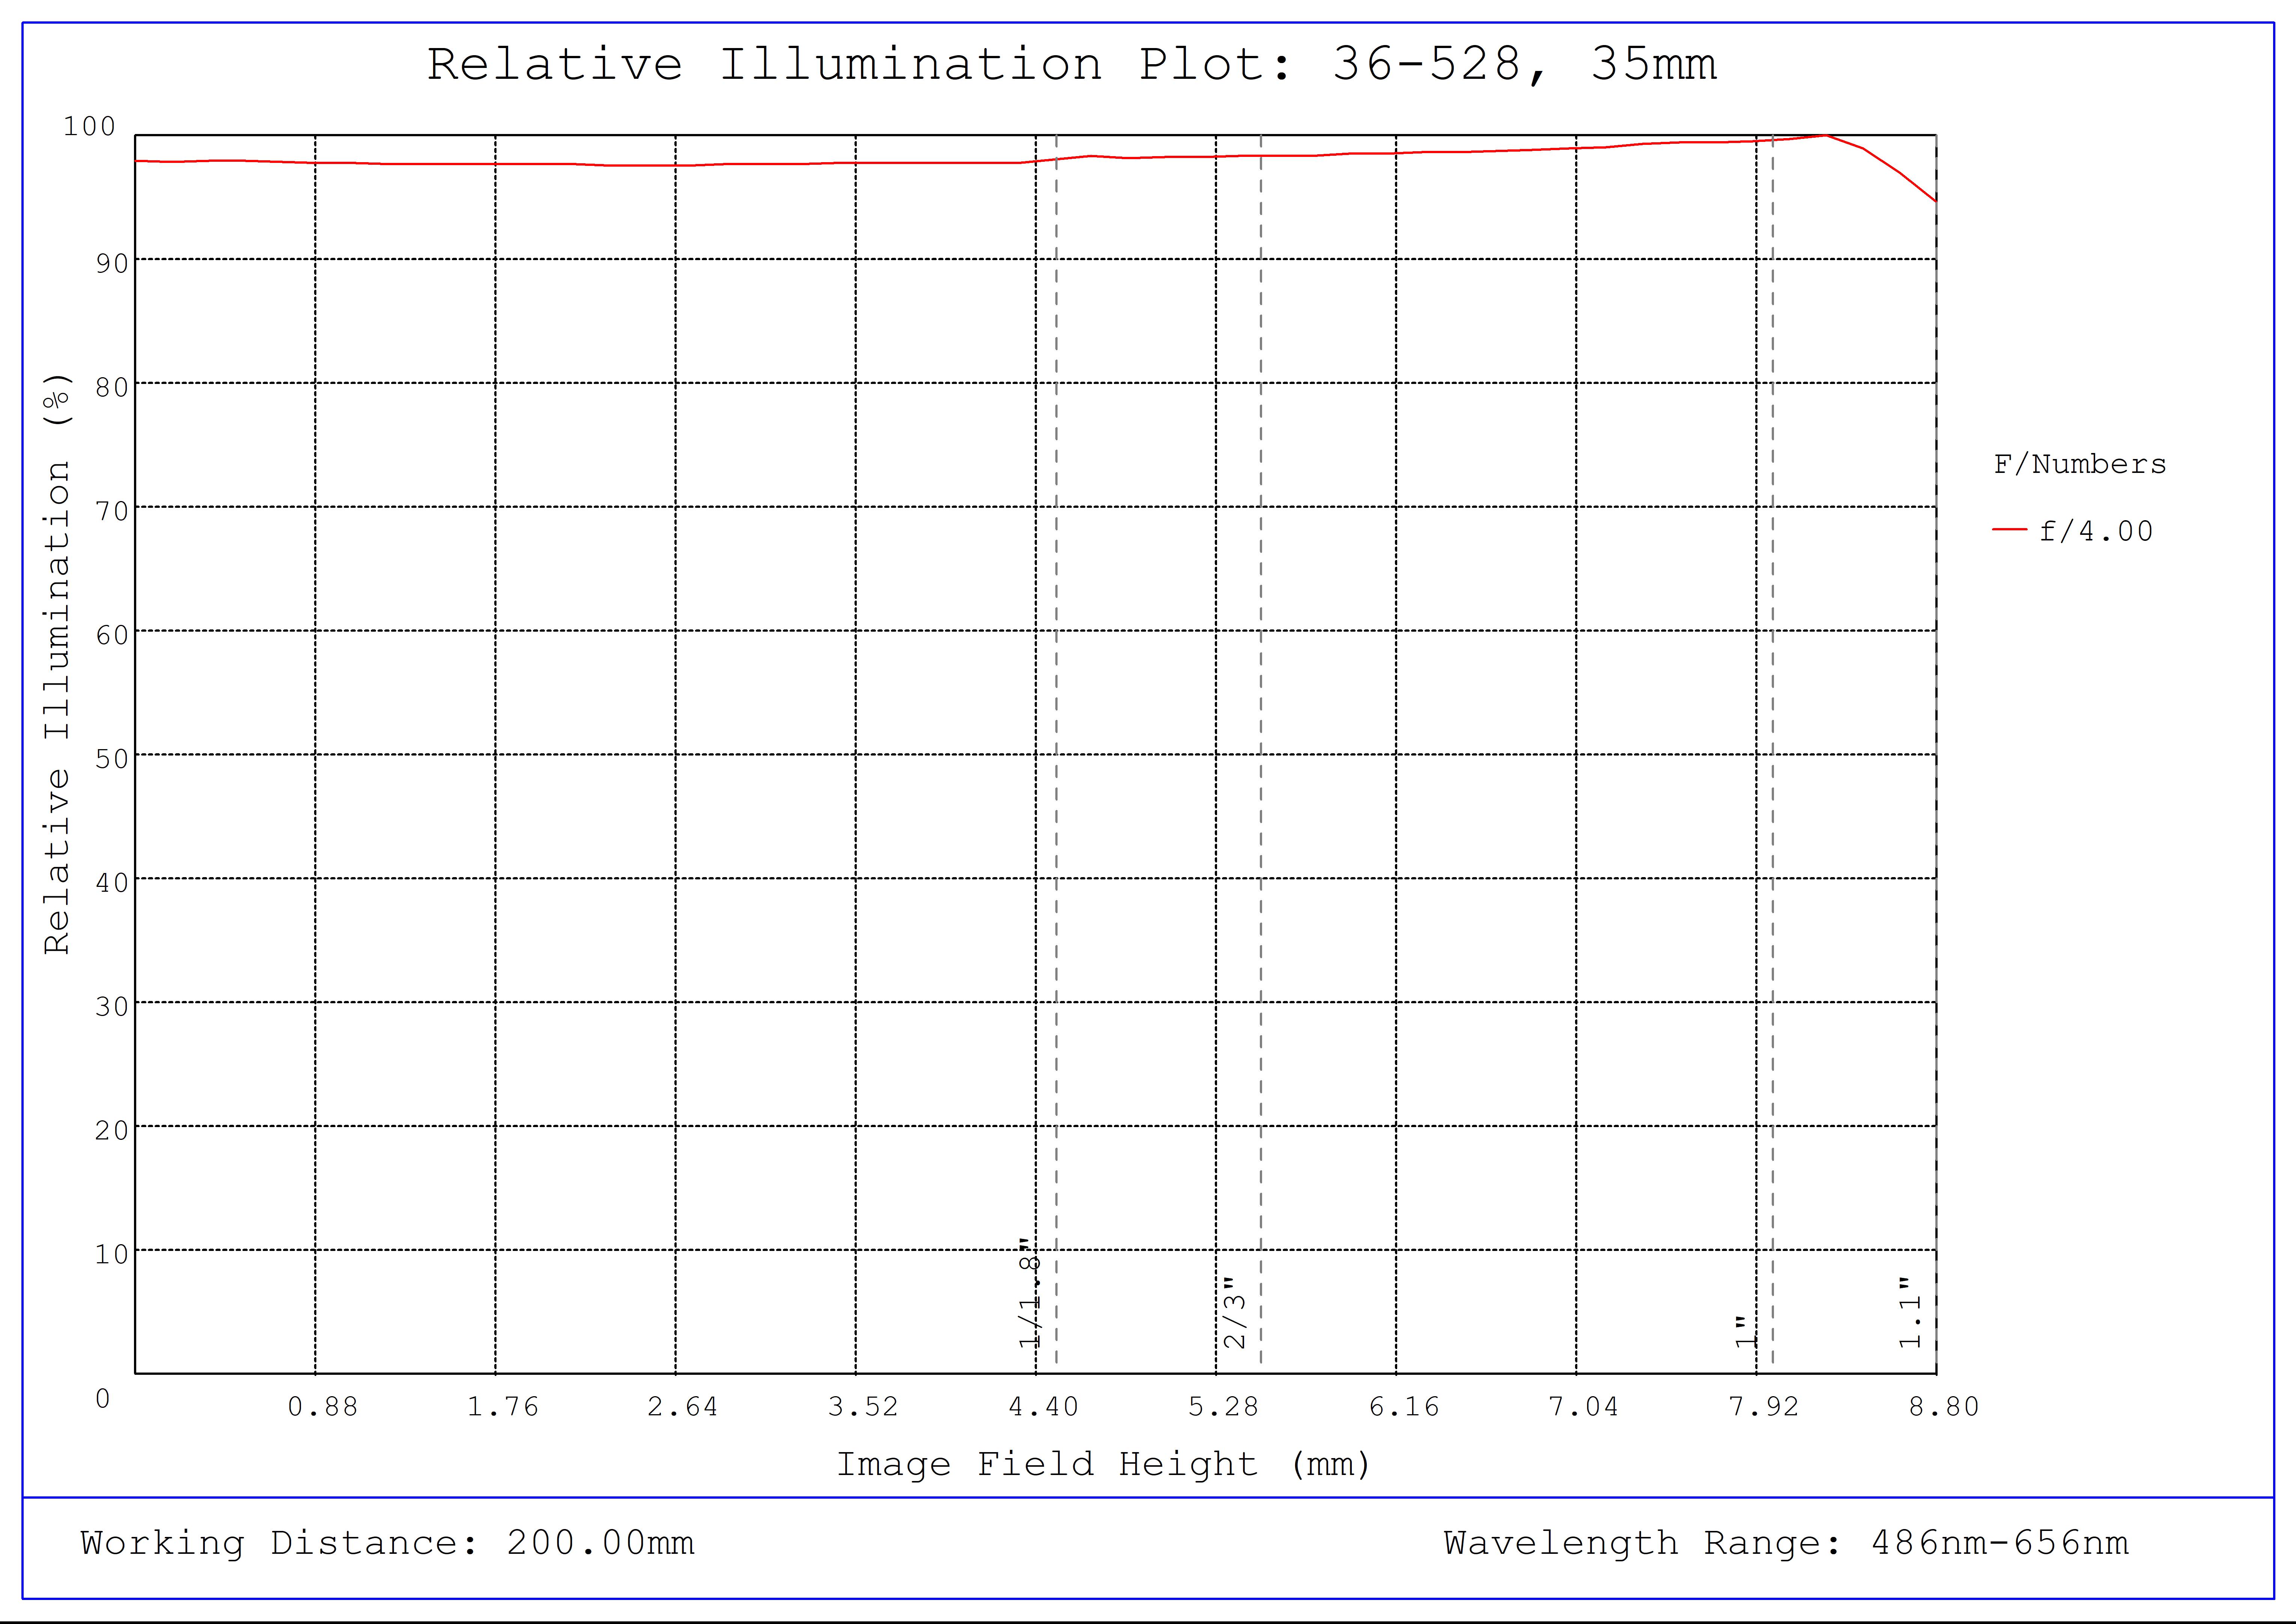 #36-528, 35mm f/4.0, HPr Series Fixed Focal Length Lens, Relative Illumination Plot